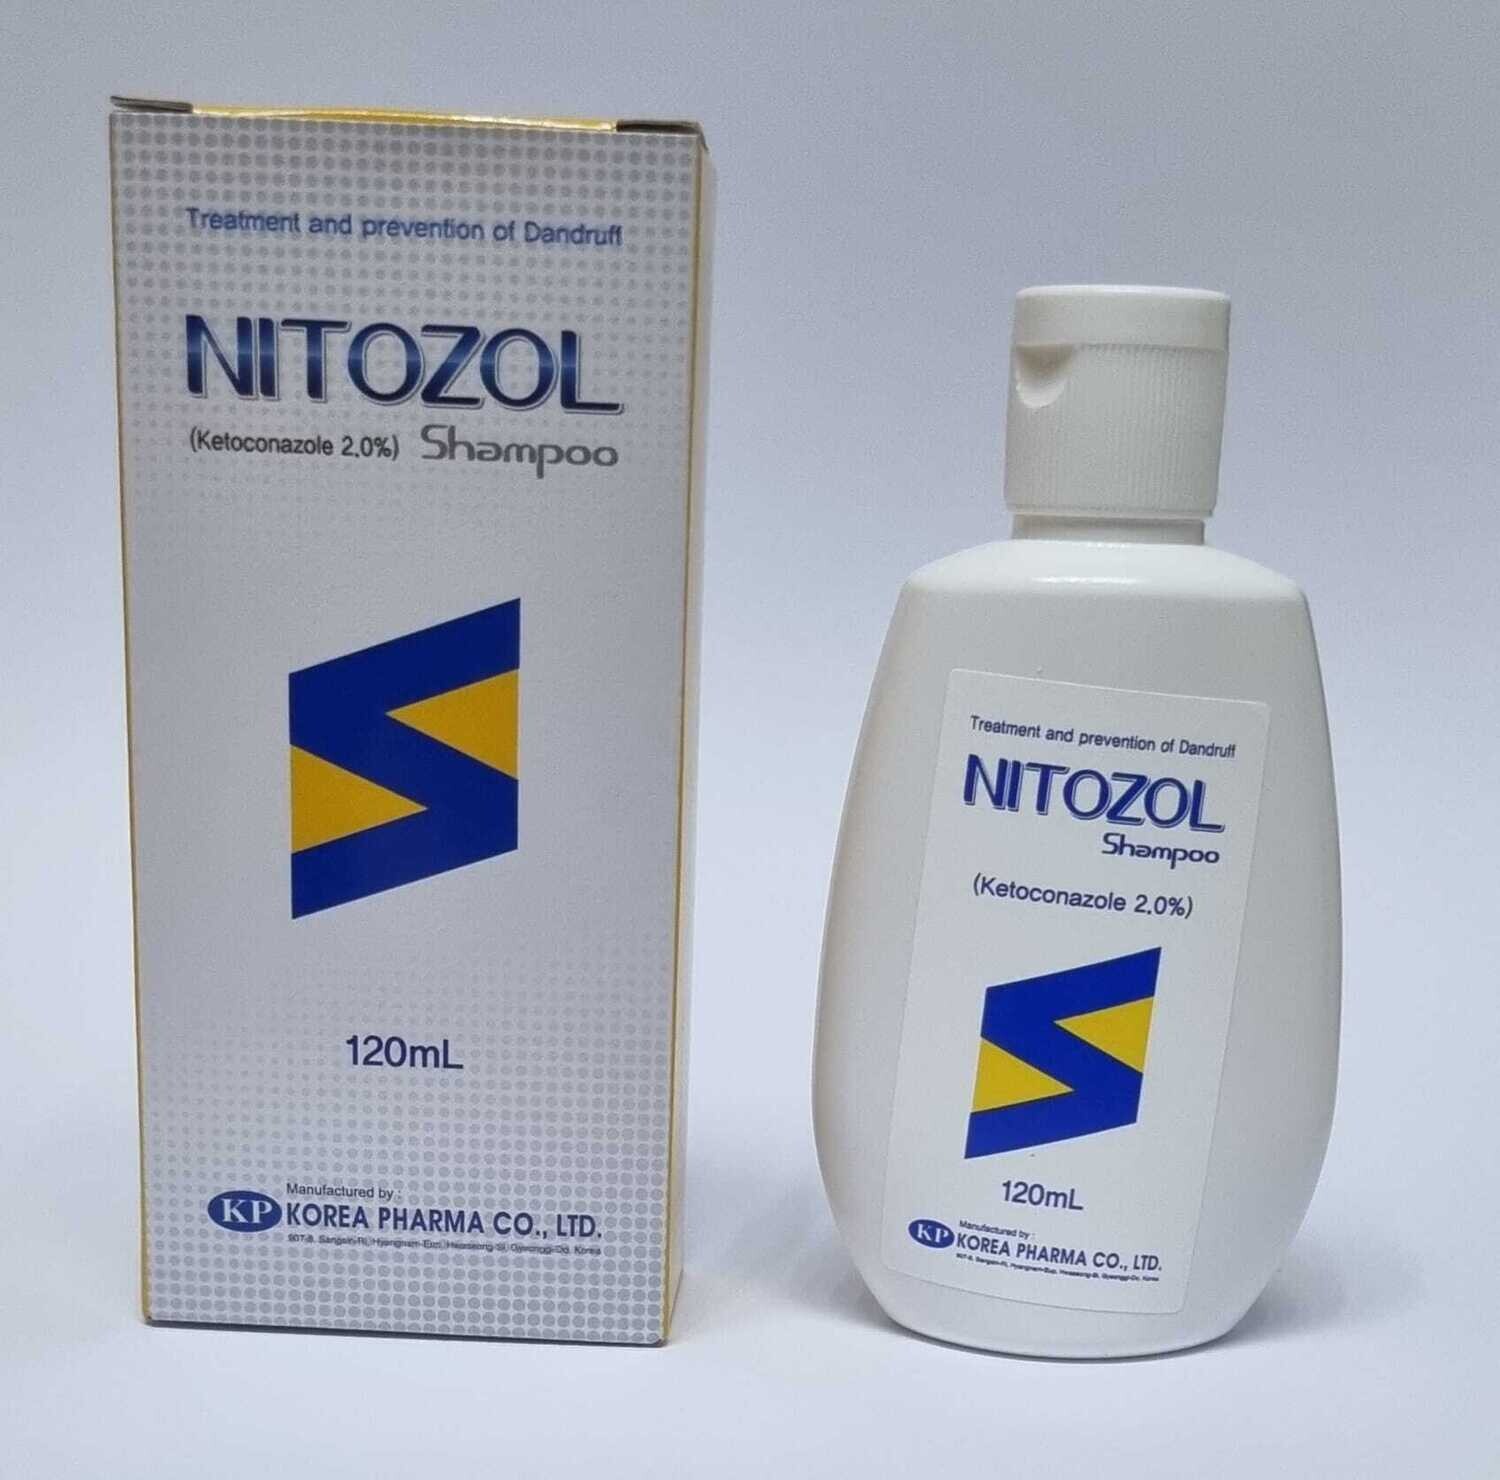 Nitozol Shampoo (Ketoconazole 2.0%) 120ml